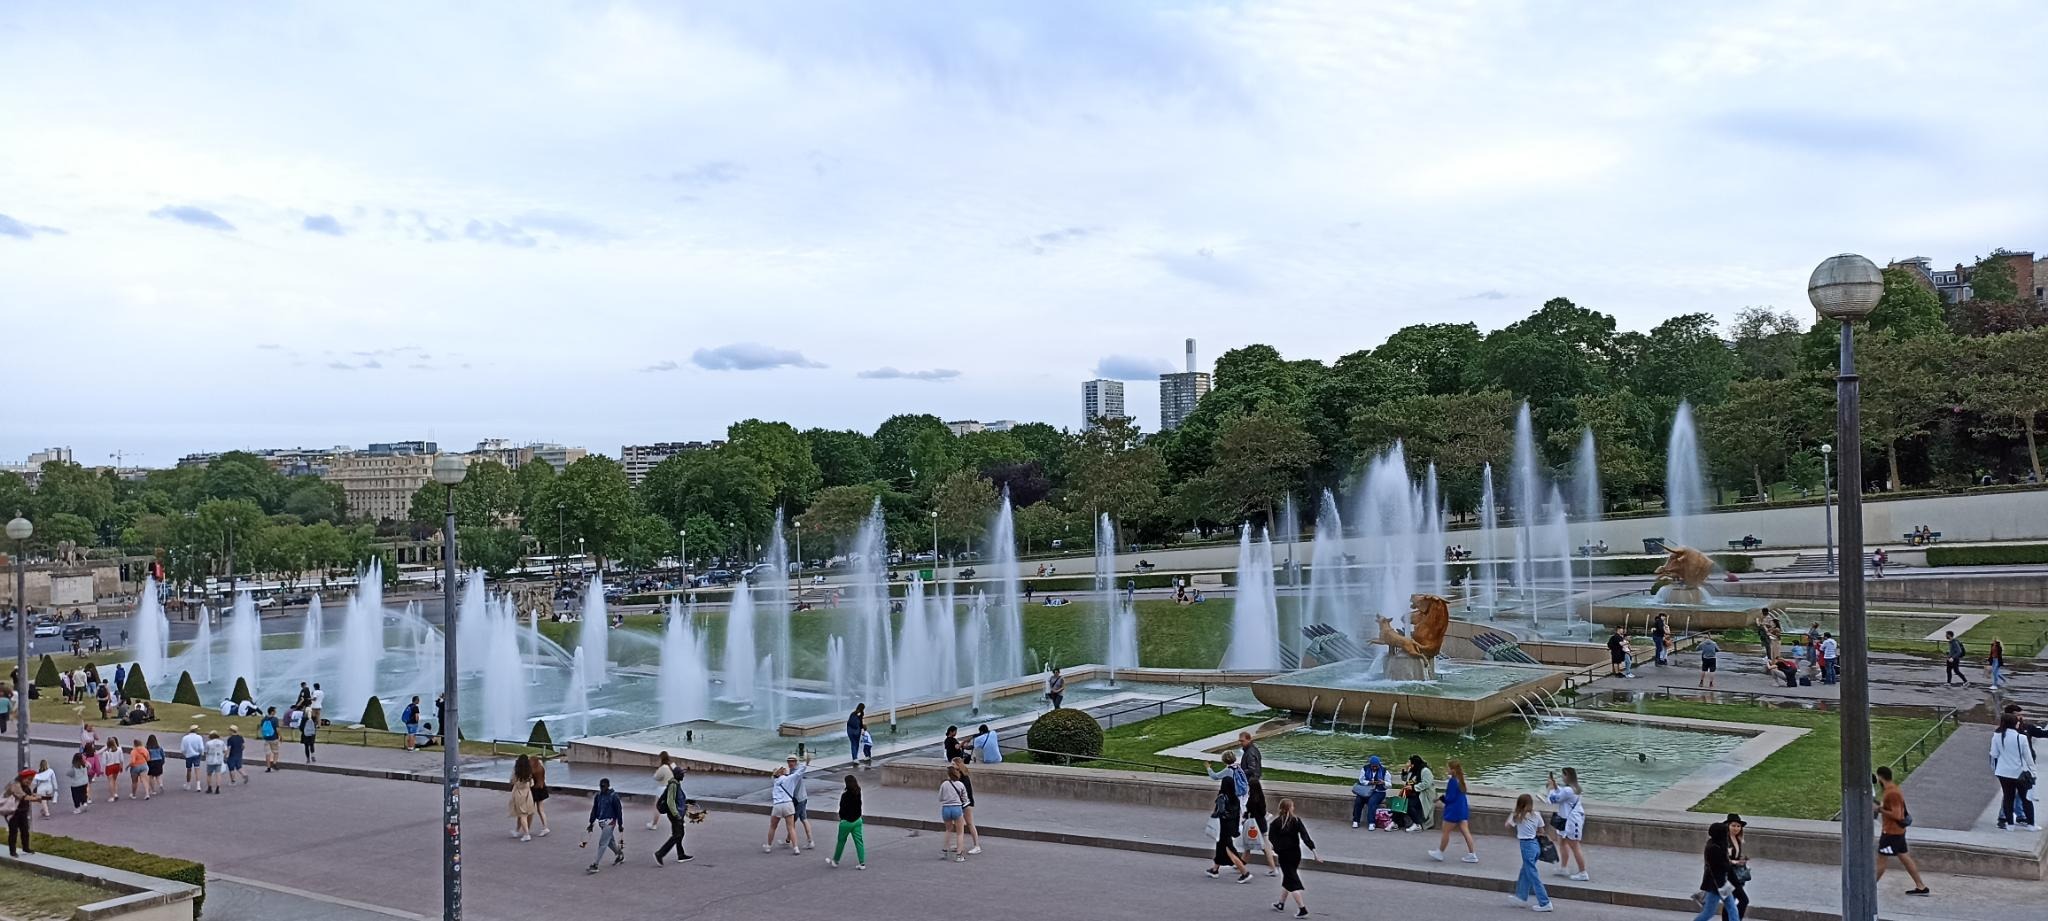 Picture of the Trocadero Gardens